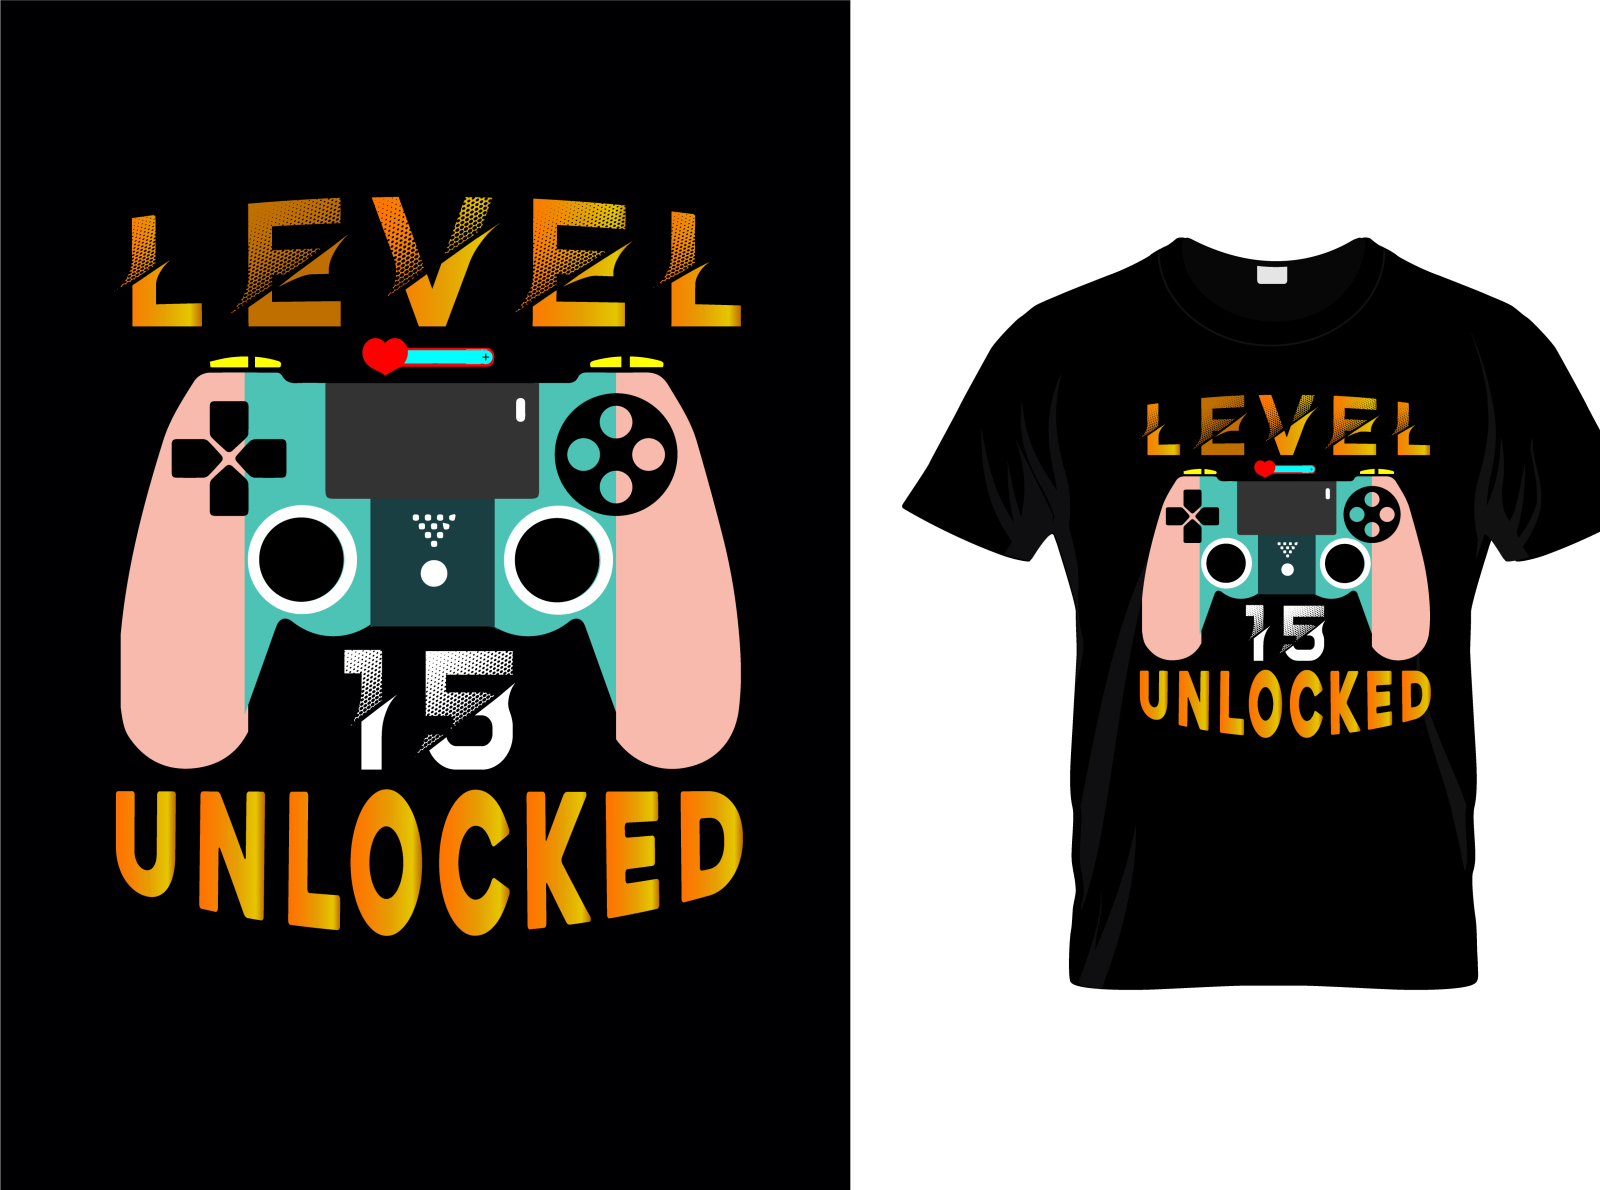 level 15 unlocked t-shirt by Minhaj Hossain on Dribbble